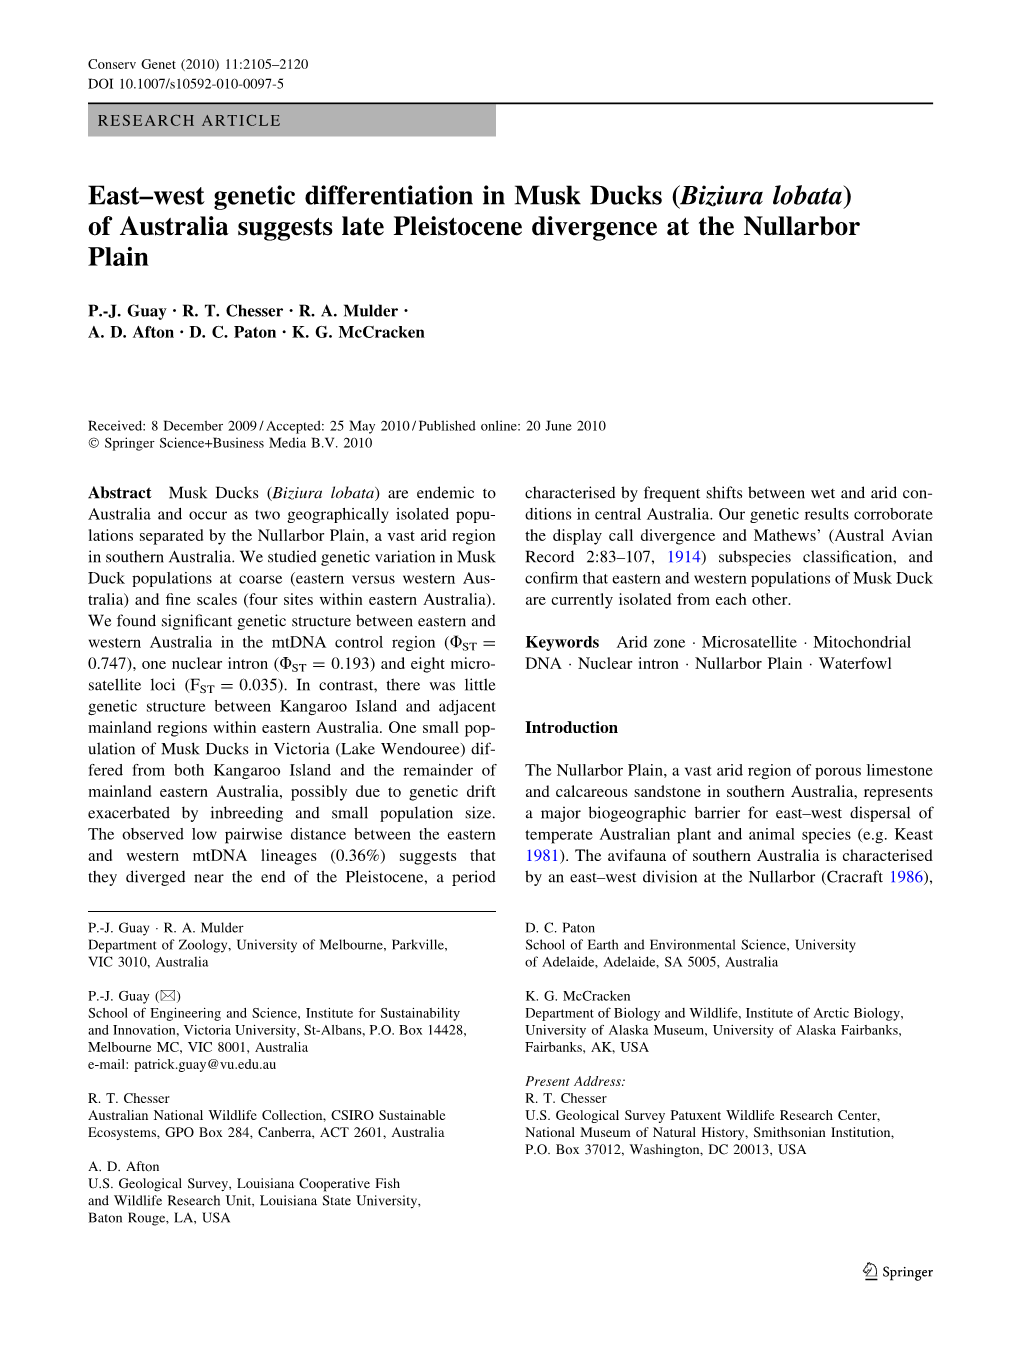 East–West Genetic Differentiation in Musk Ducks (Biziura Lobata) of Australia Suggests Late Pleistocene Divergence at the Nullarbor Plain